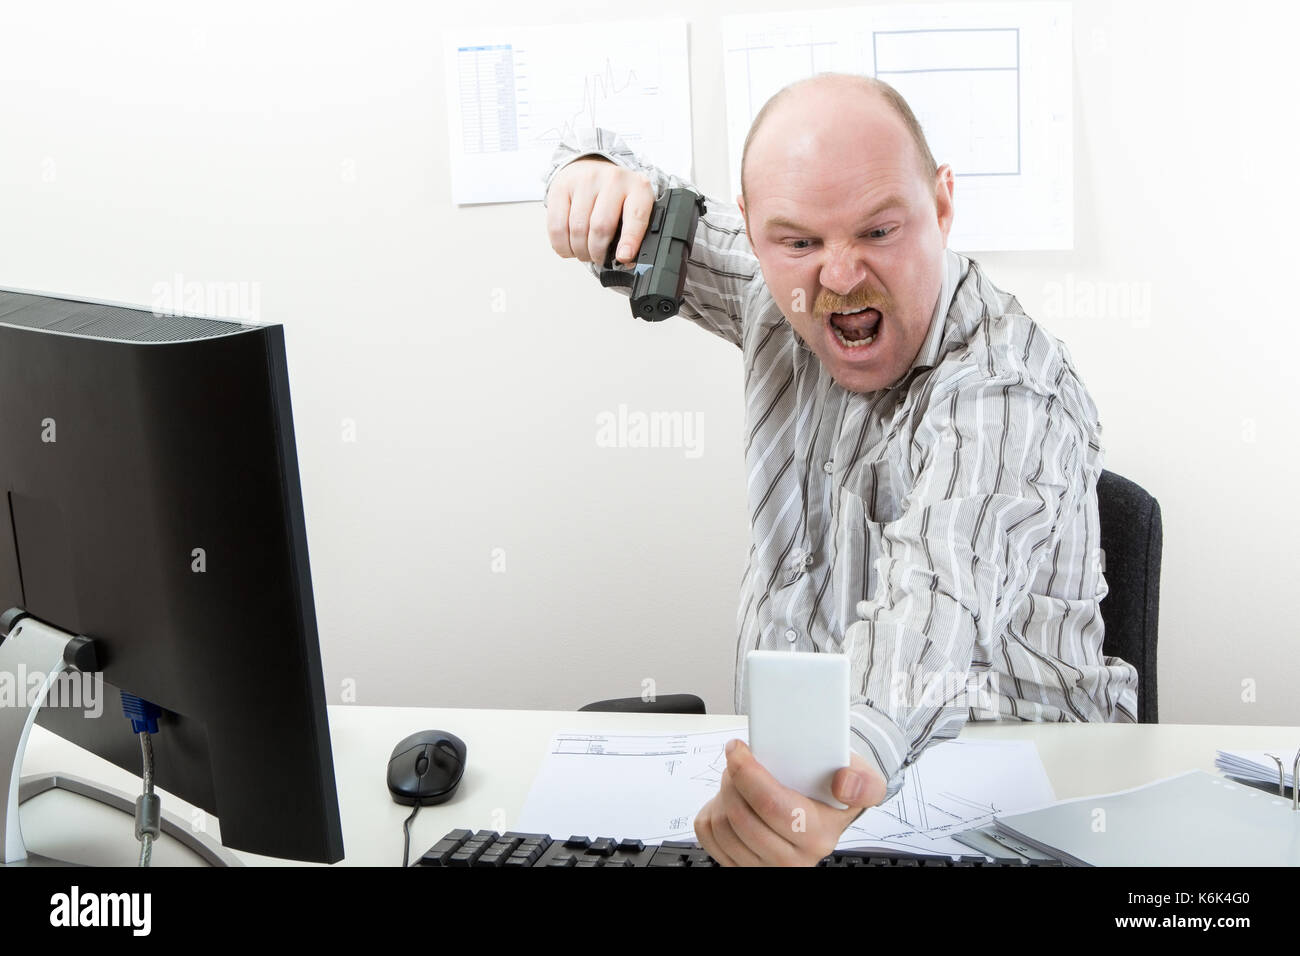 Businessman Aiming Gun On Mobile Phone At Desk Stock Photo